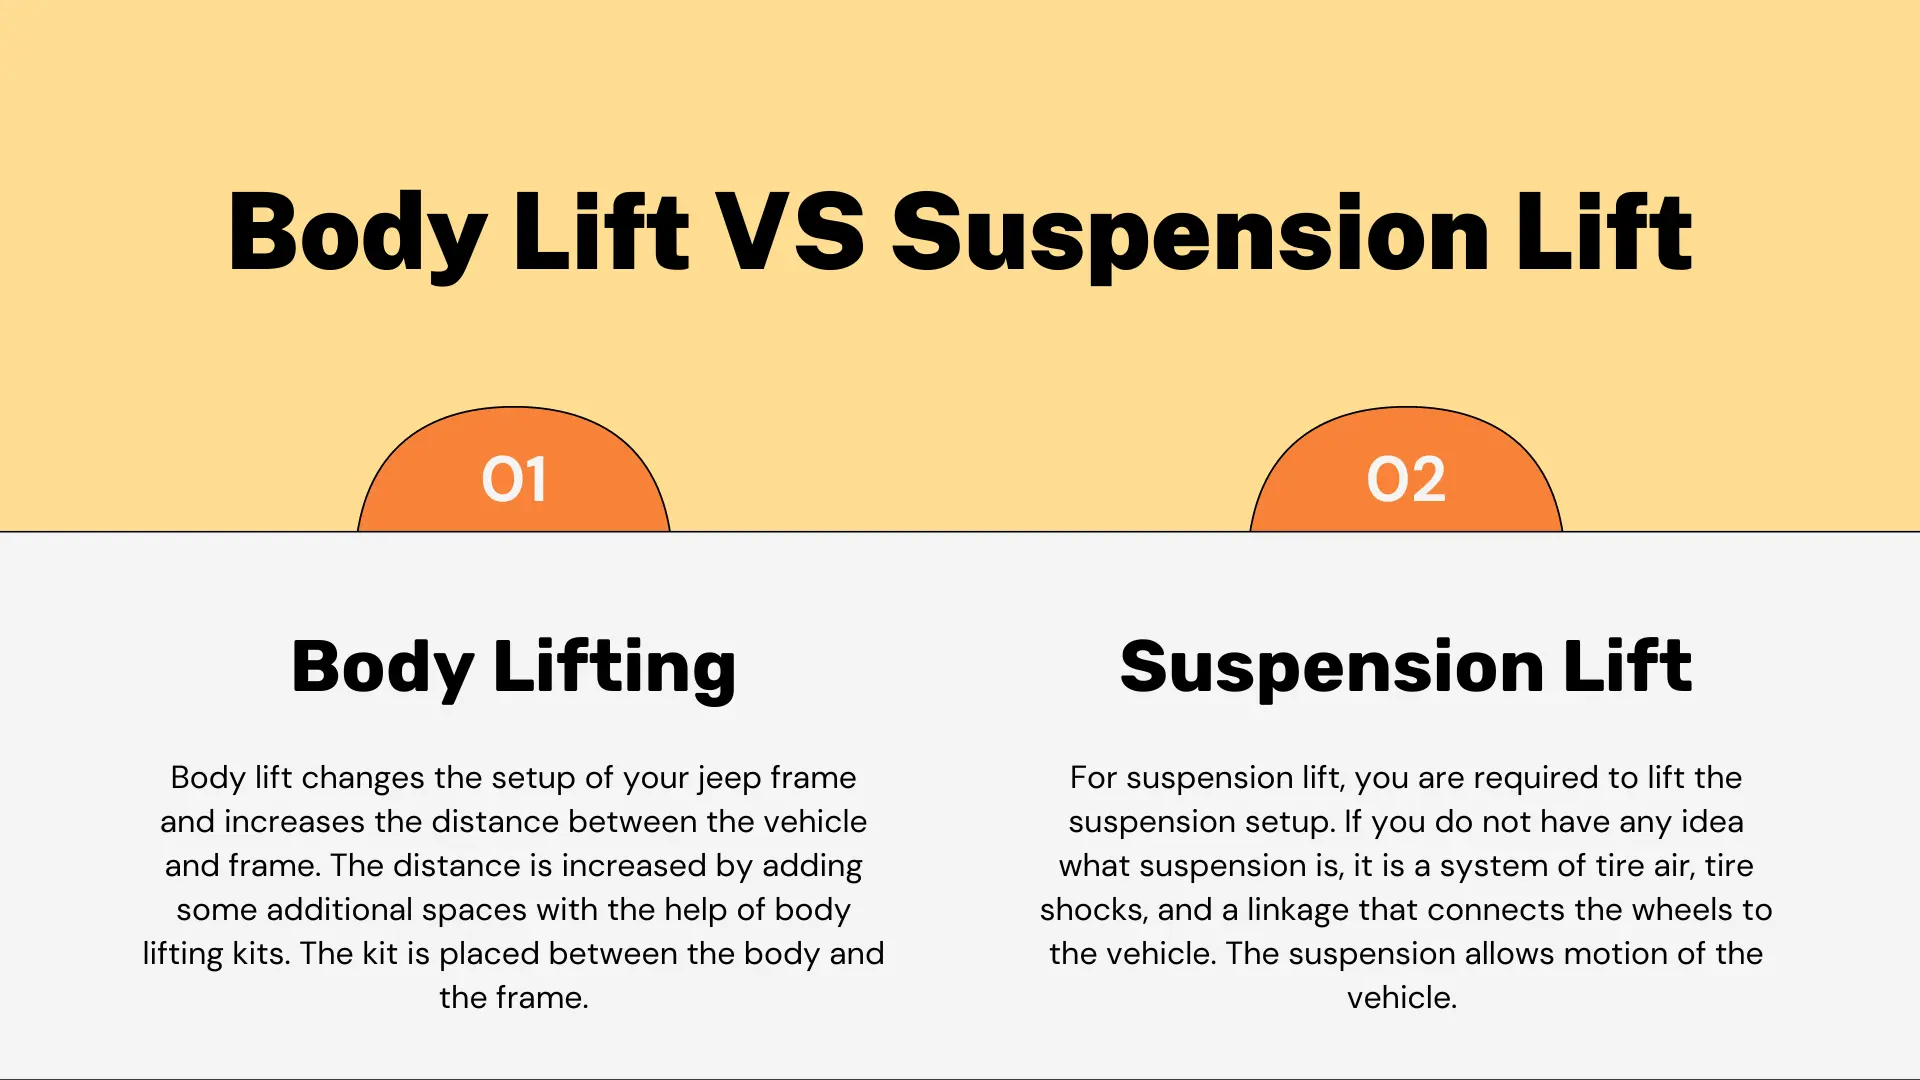 Body Lift VS Suspension Lift